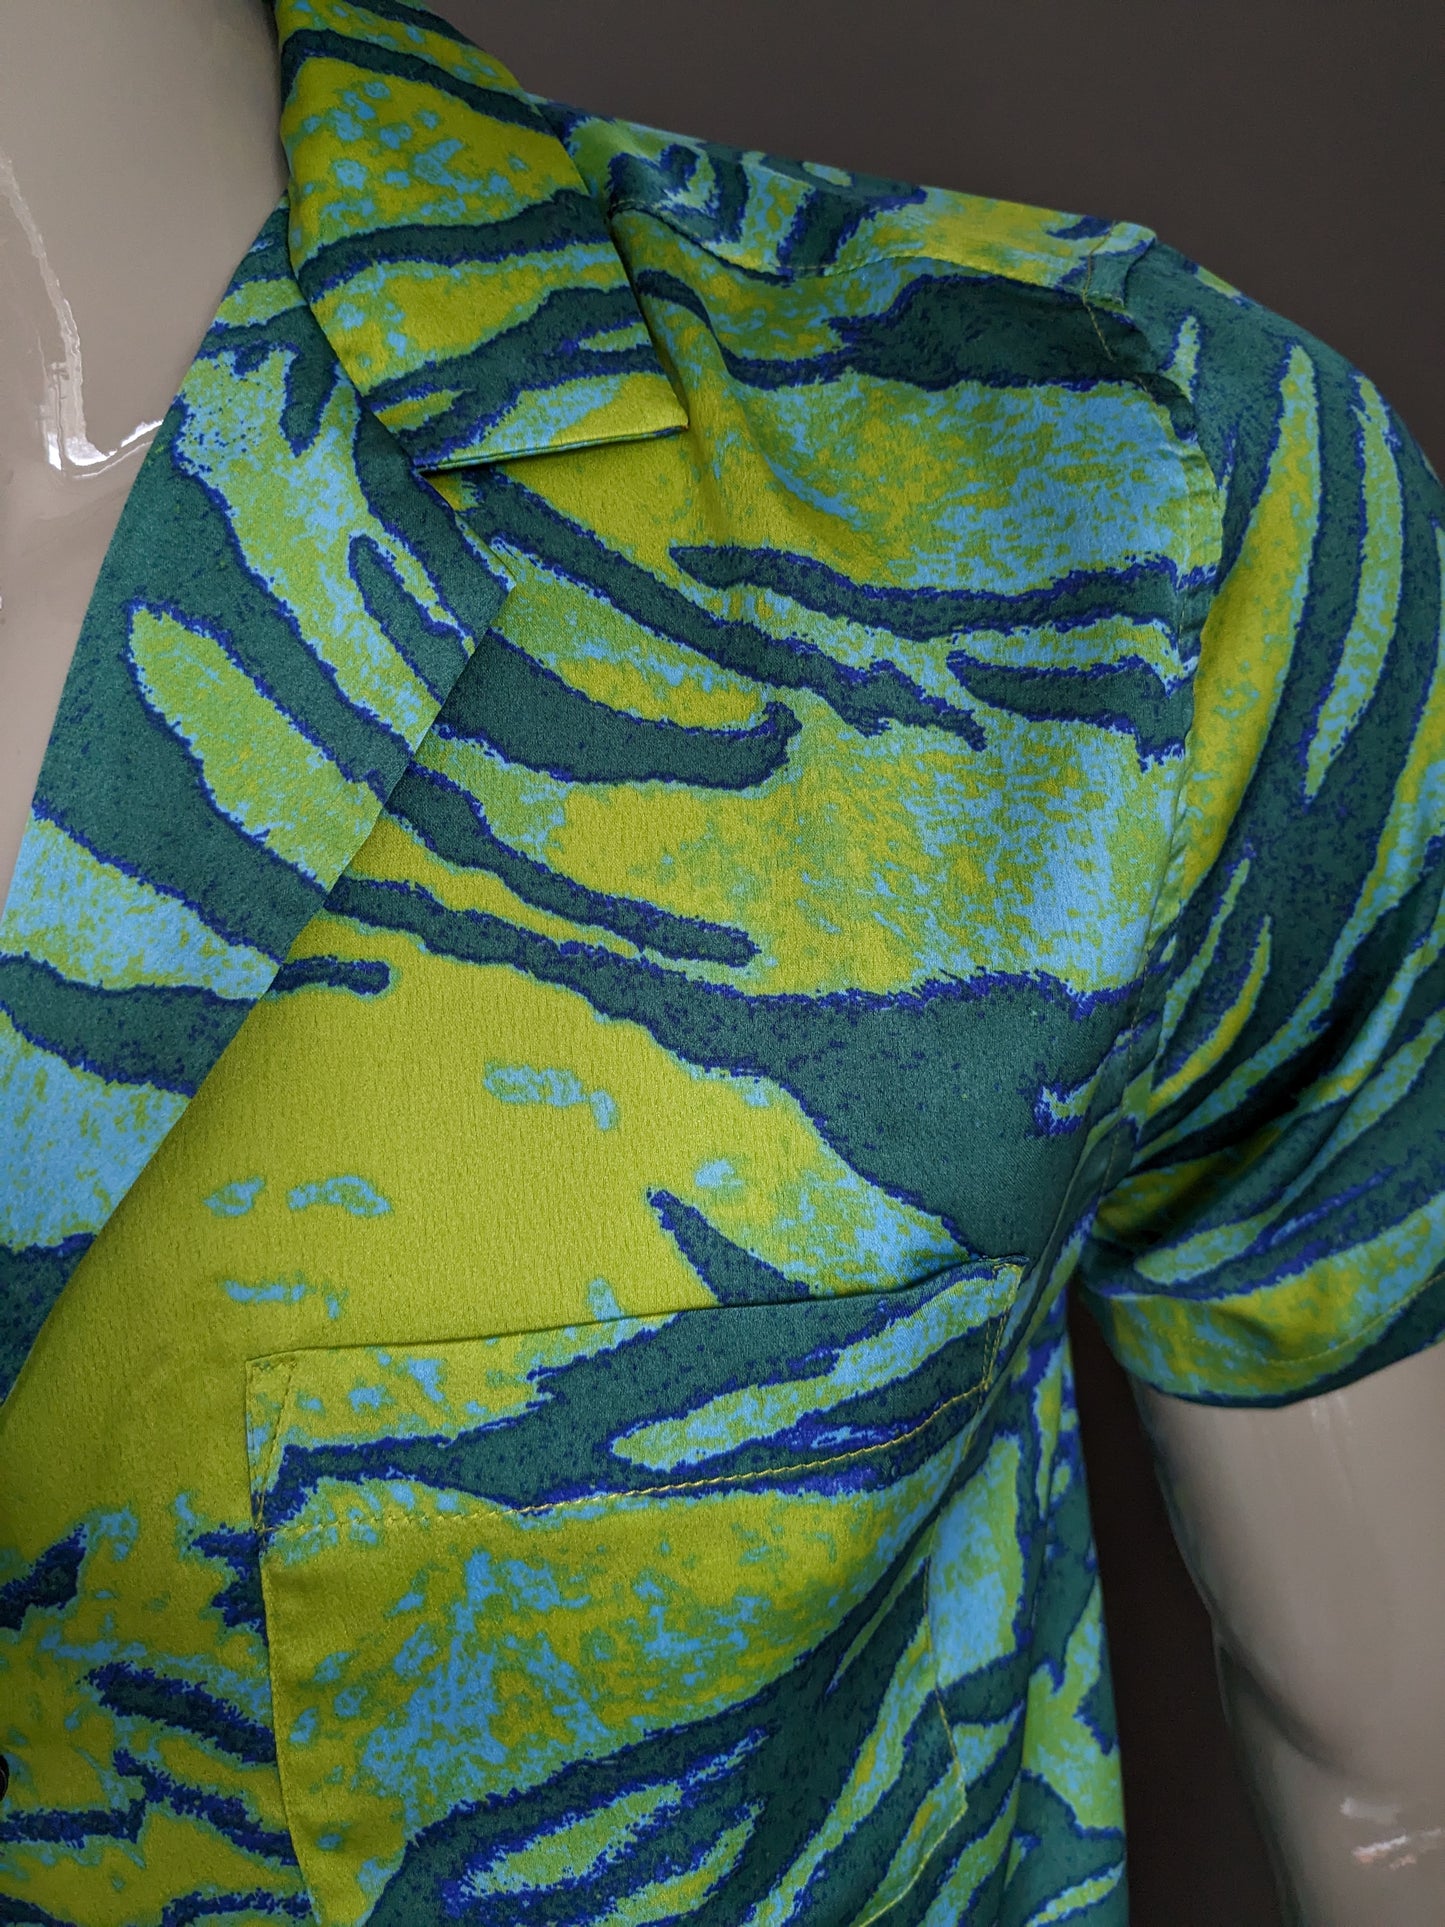 ASOS Design Shirt Short Sleeve. Impression bleu vert. Taille S / M.